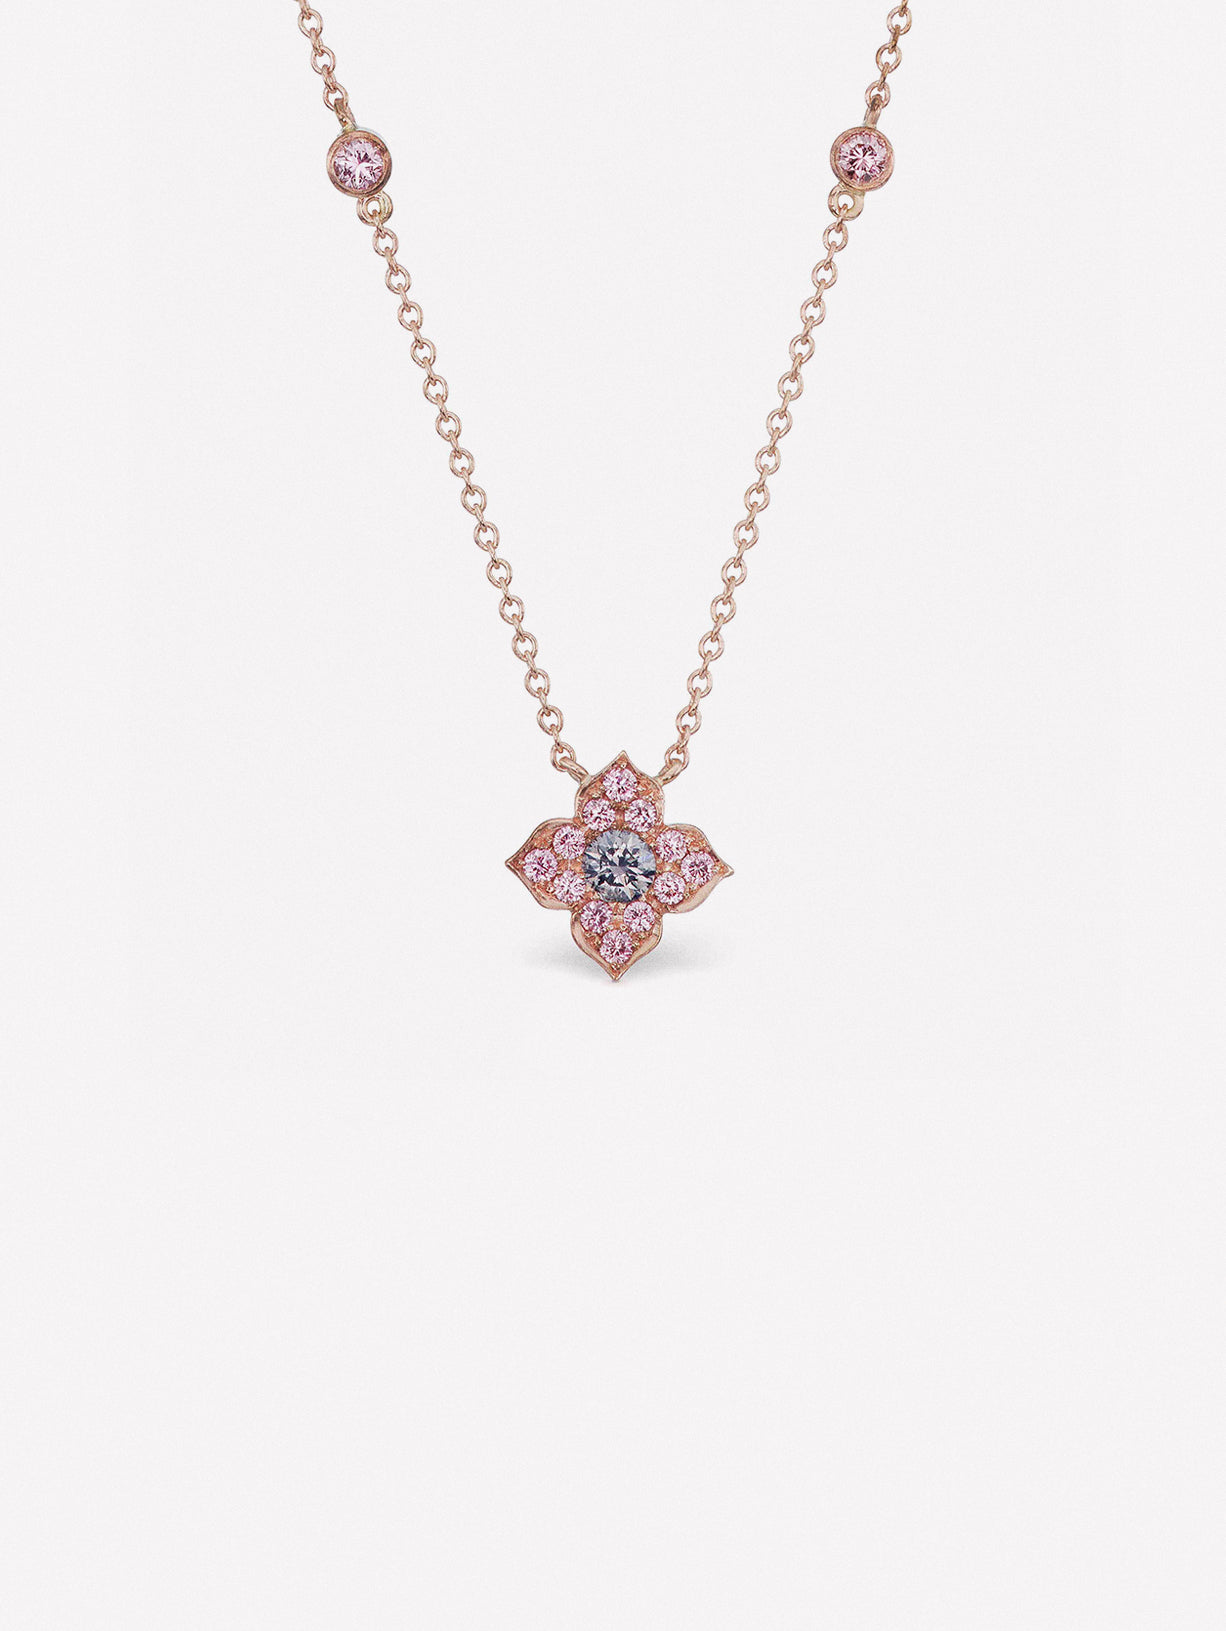 Argyle Pink Diamonds and Argyle Blue diamond in Iconic Azalea necklace design from J Fine 